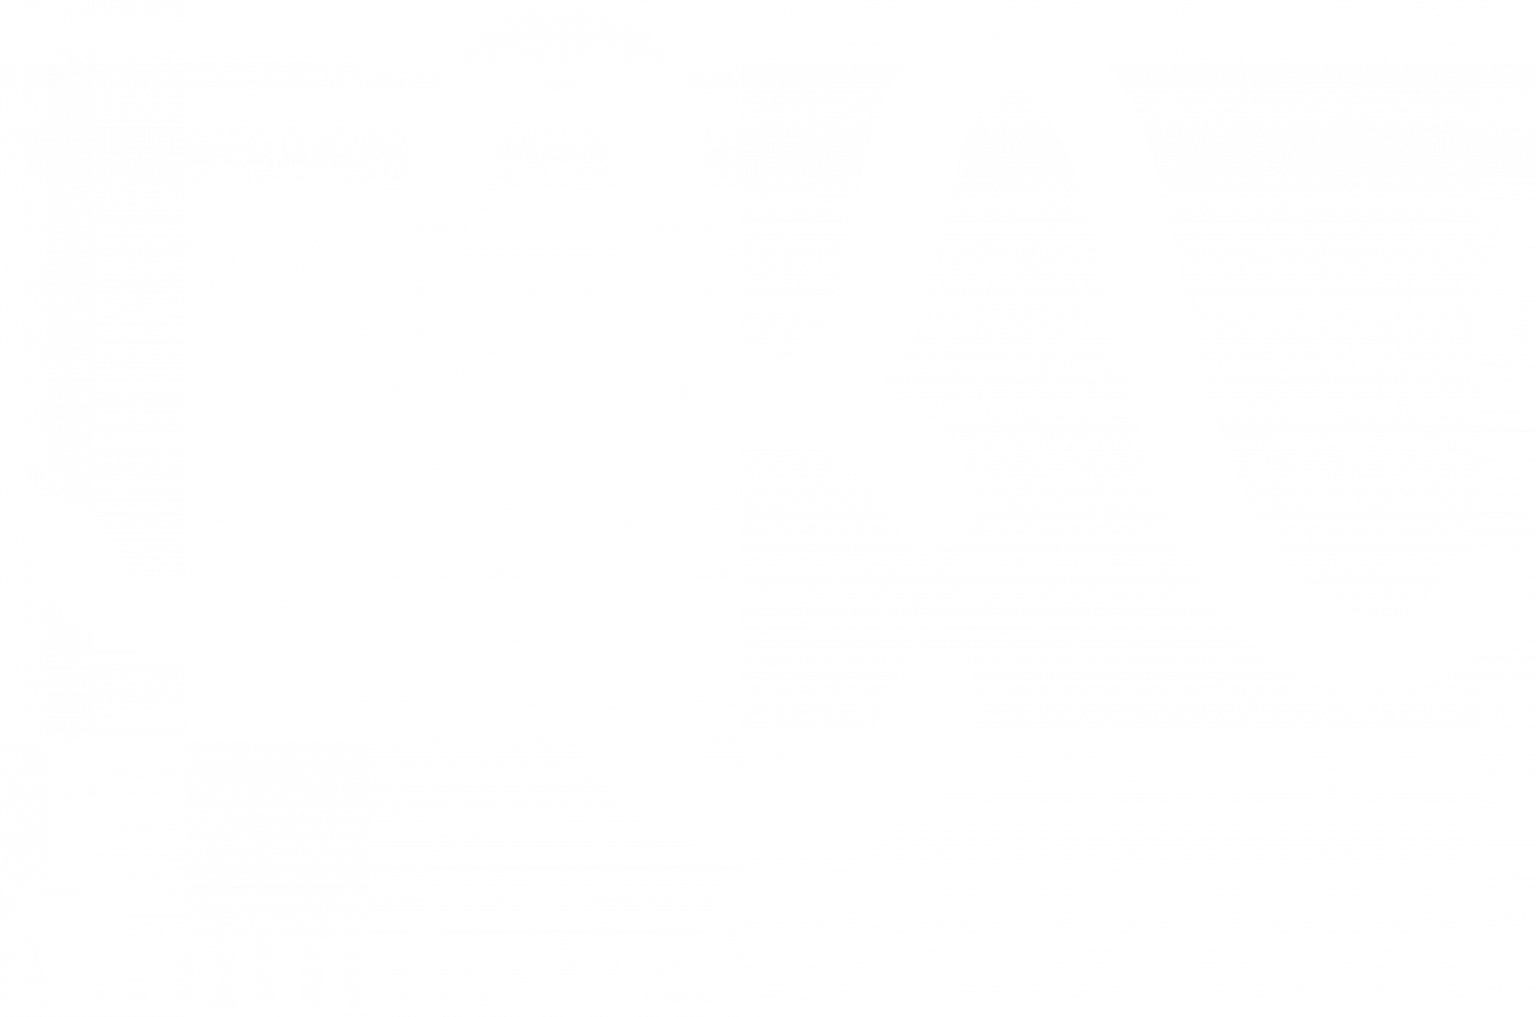 to Mountain Creek Ranch in Aurora, Missouri